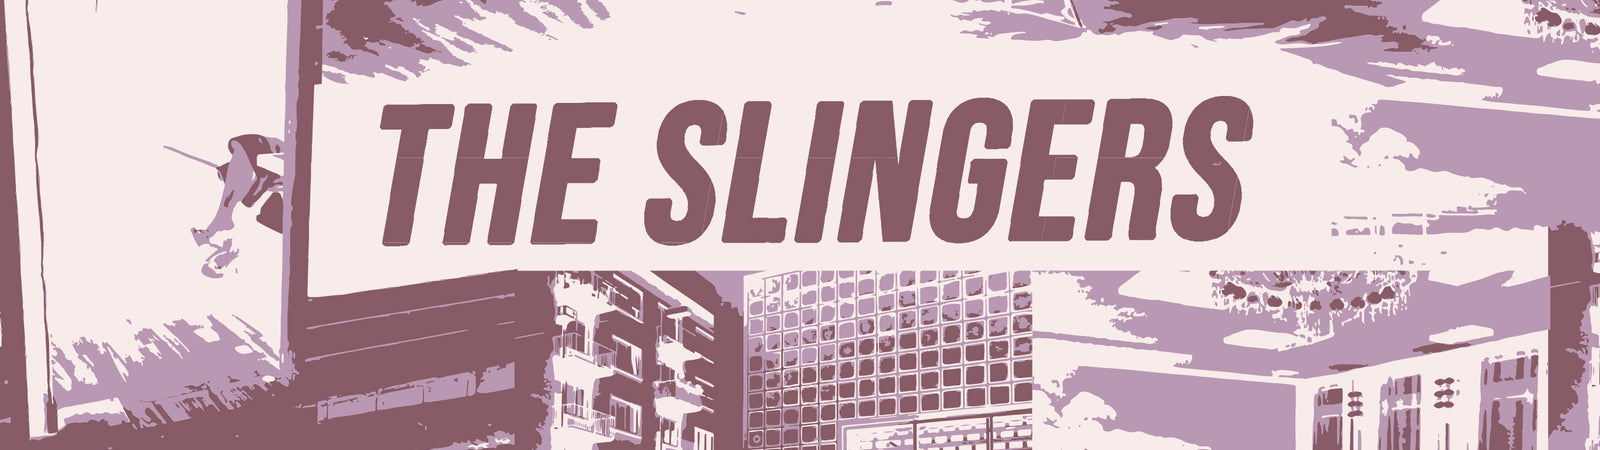 The Slingers